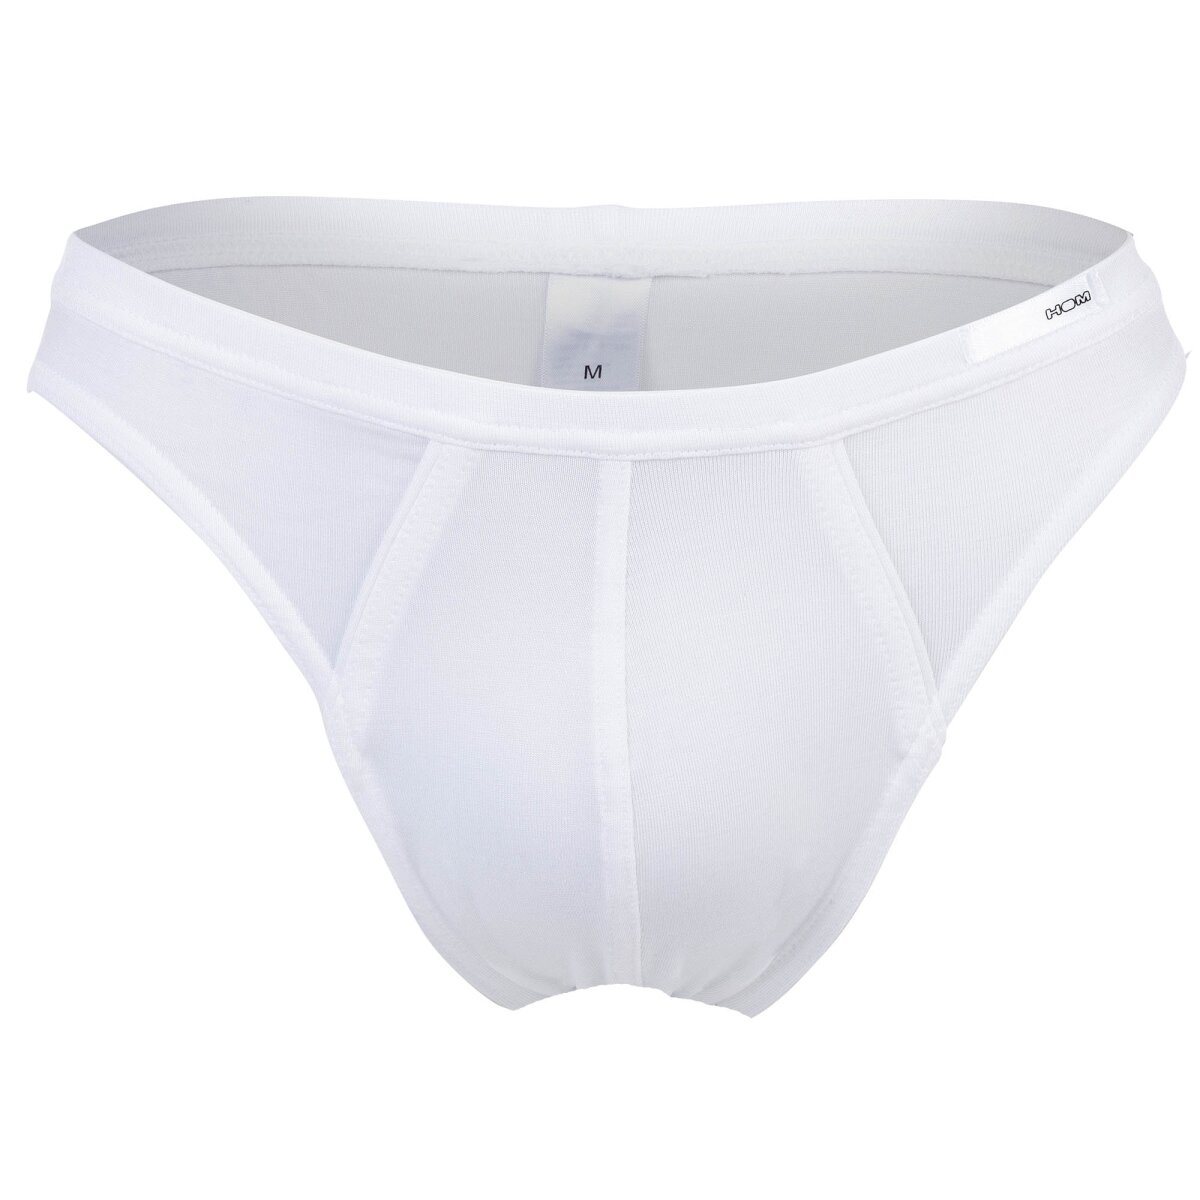 https://www.yourfashionplace.de/media/image/product/175107/lg/402463_hom-mens-comfort-micro-brief-tencel-soft-briefs-underwear-solid-color.jpg